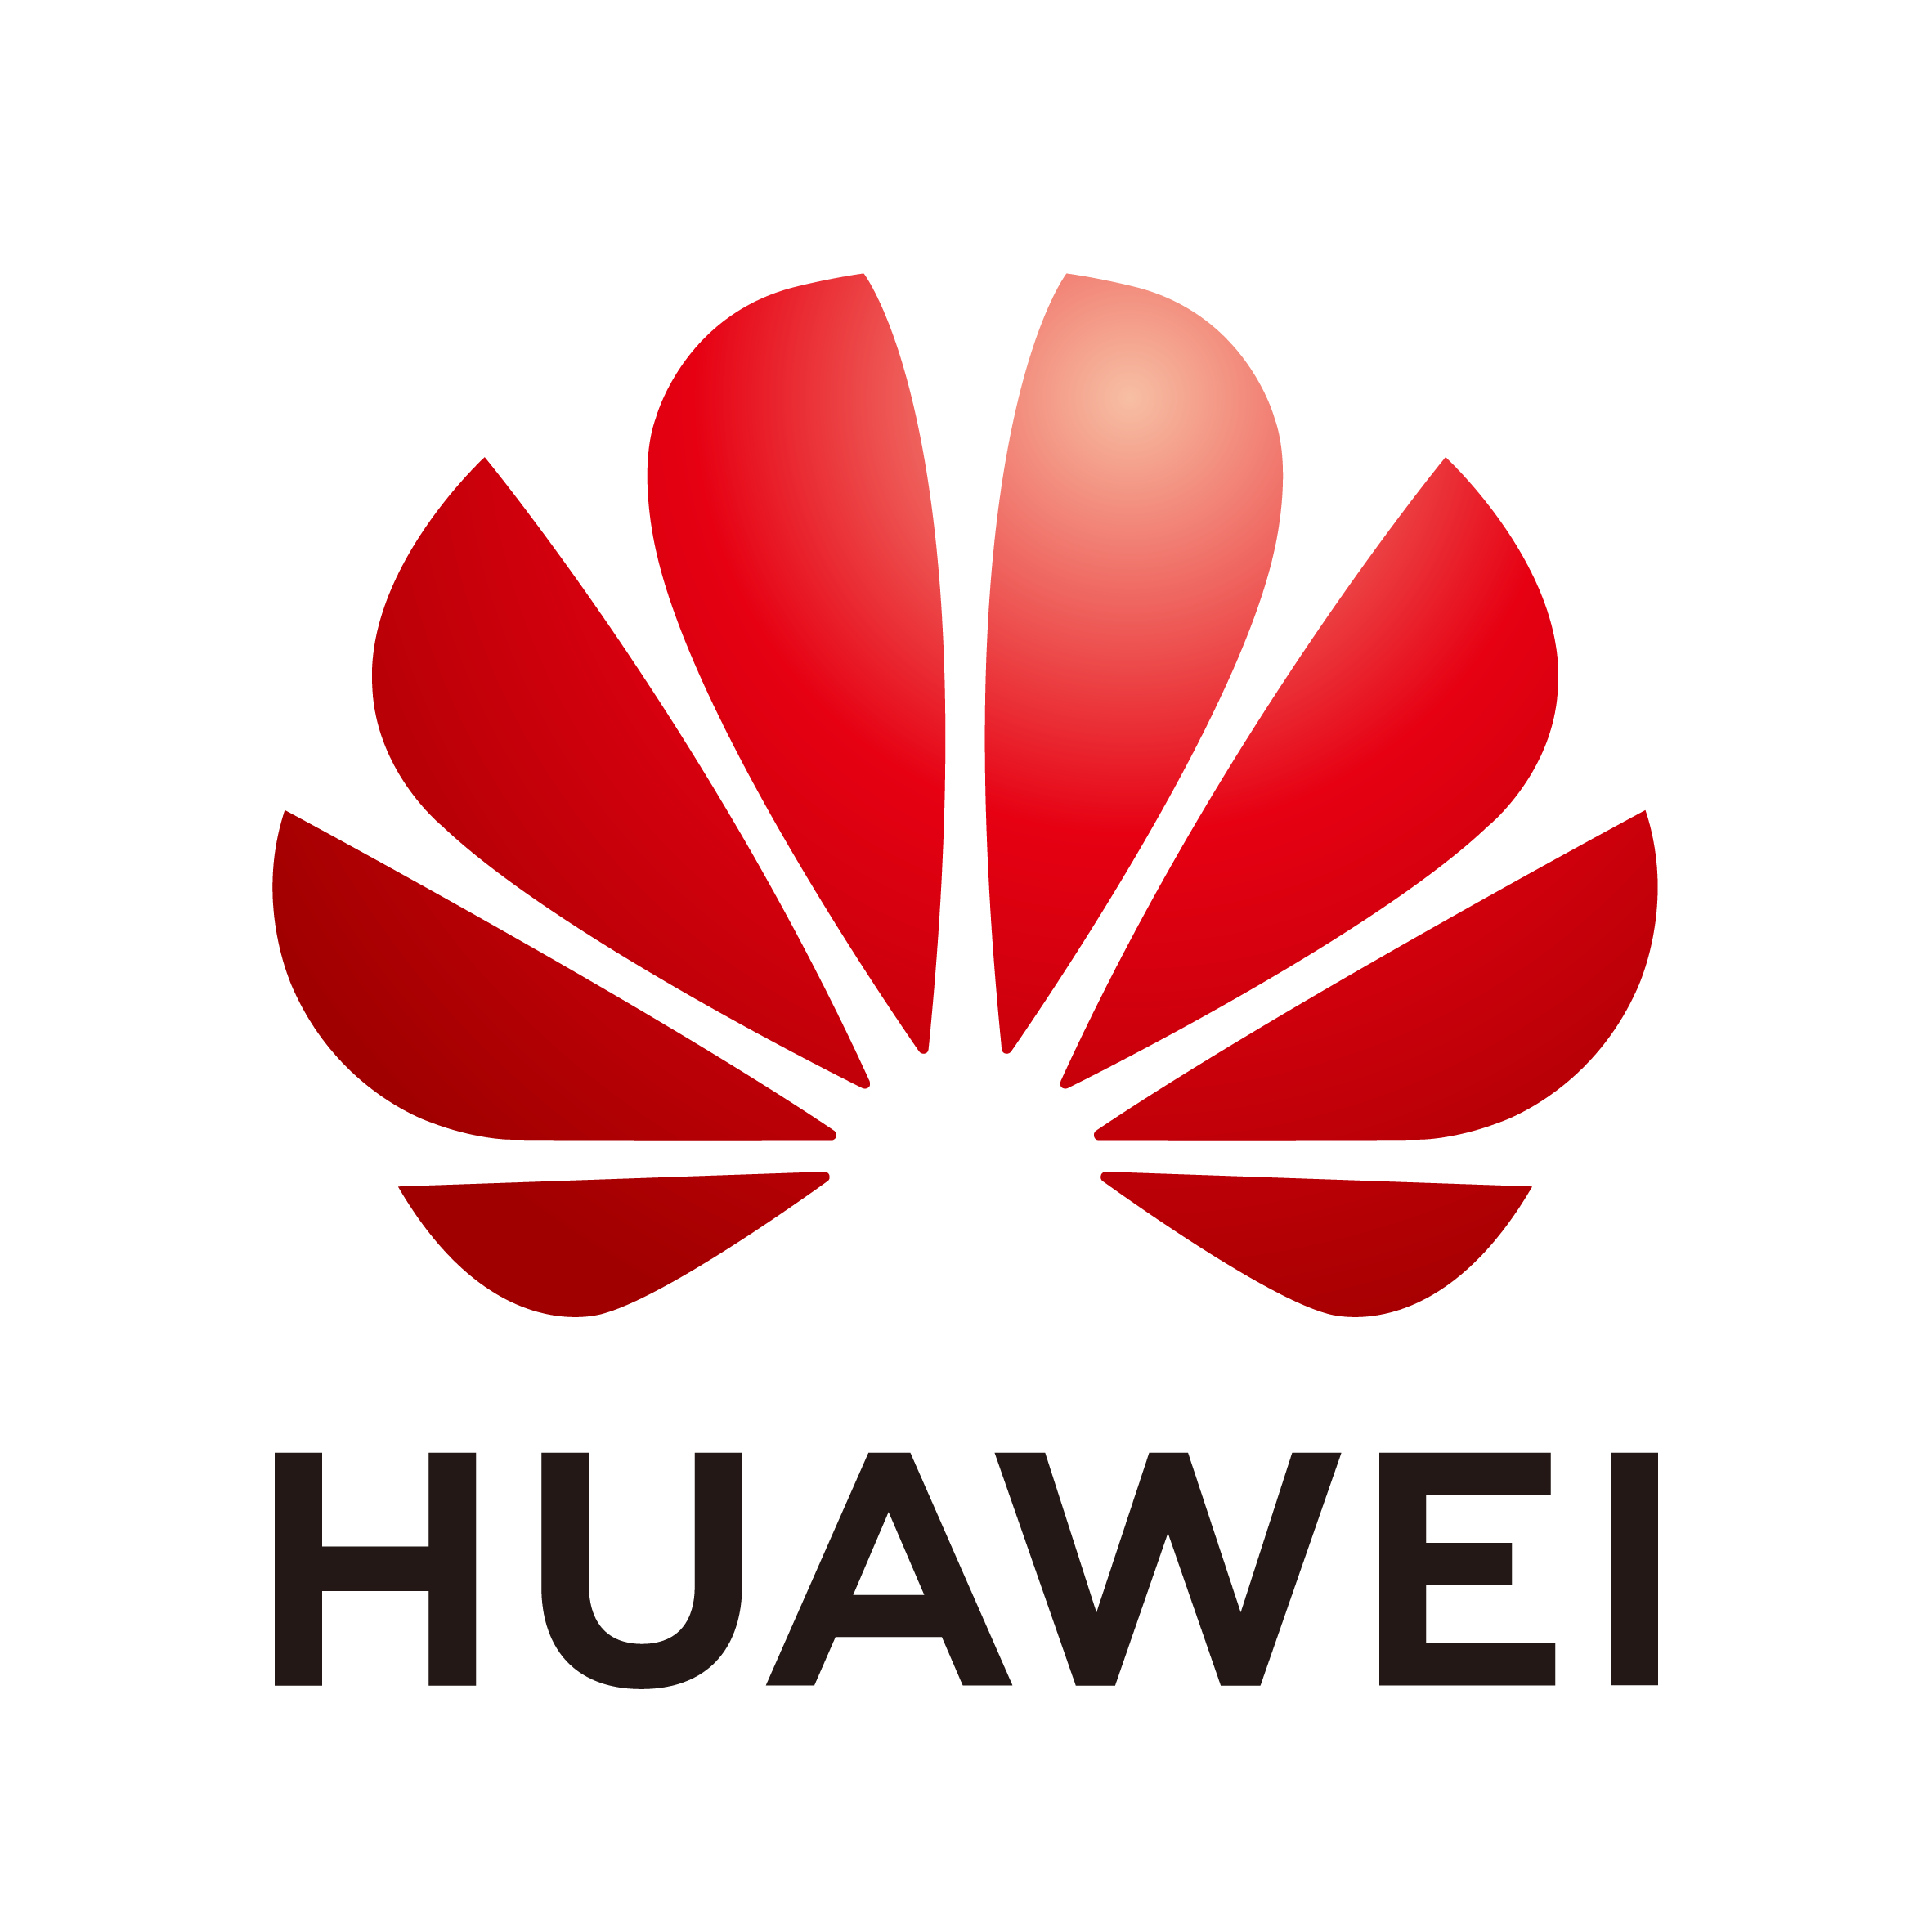 Huawei Logo_RBG_Vertical-300ppi.png